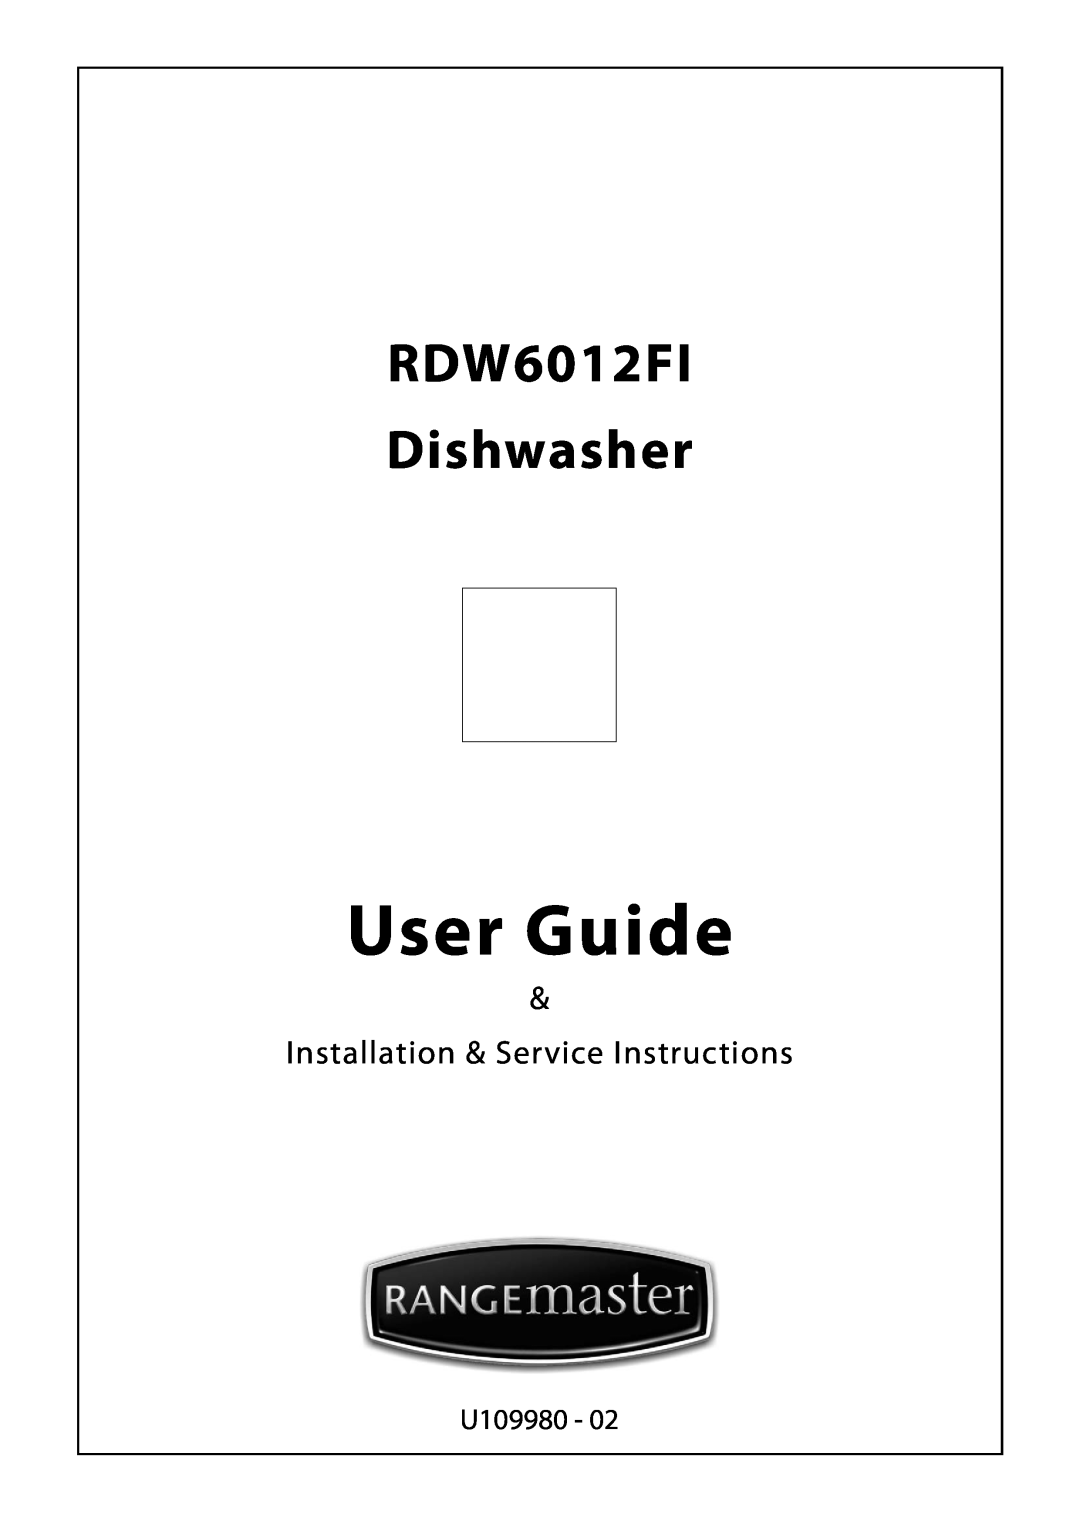 Rangemaster manual User Guide, RDW6012FI Dishwasher, Installation & Service Instructions, U109980 